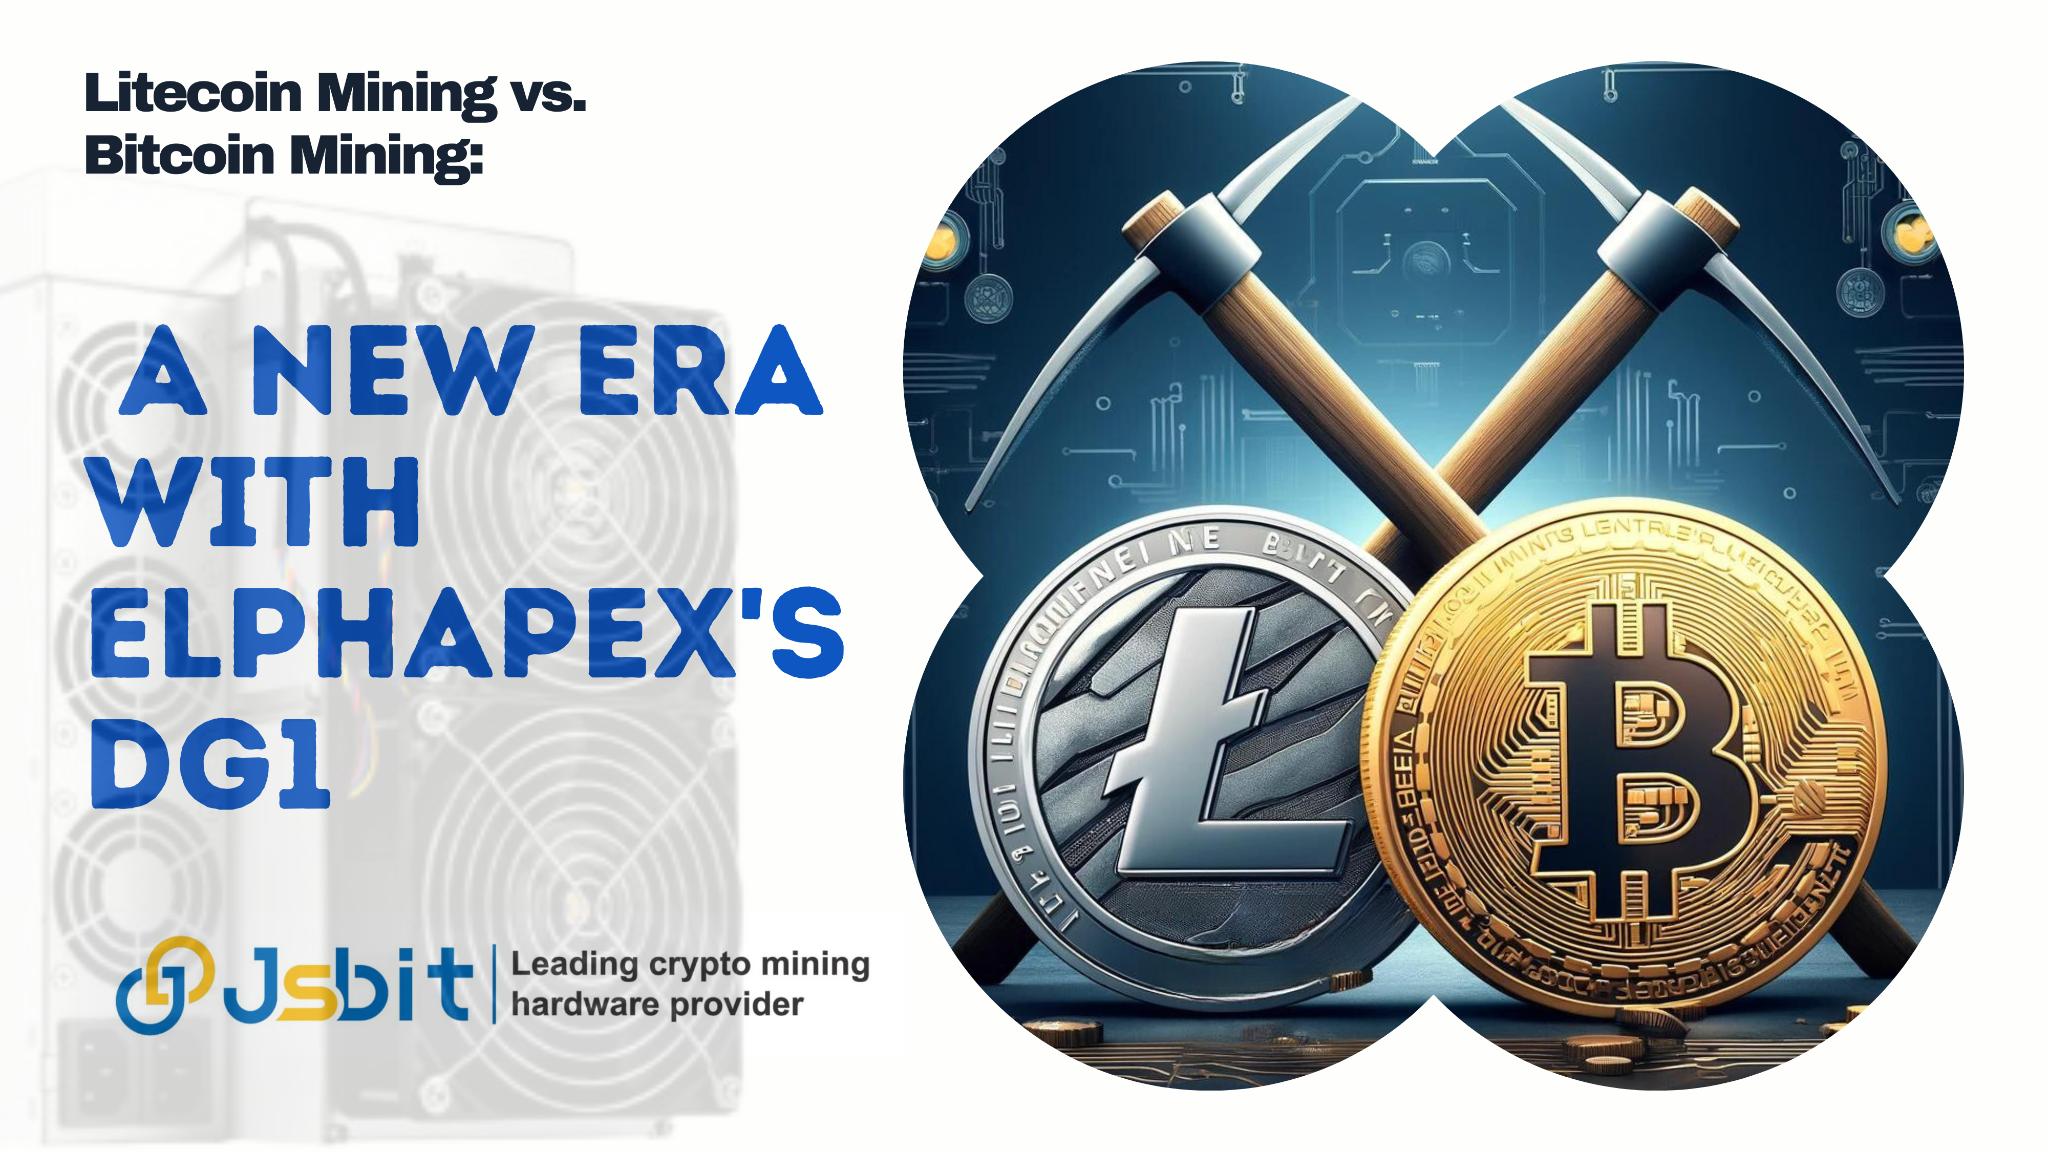 Litecoin Mining vs. Bitcoin Mining A New Era with Elphapex's DG1 blog. image